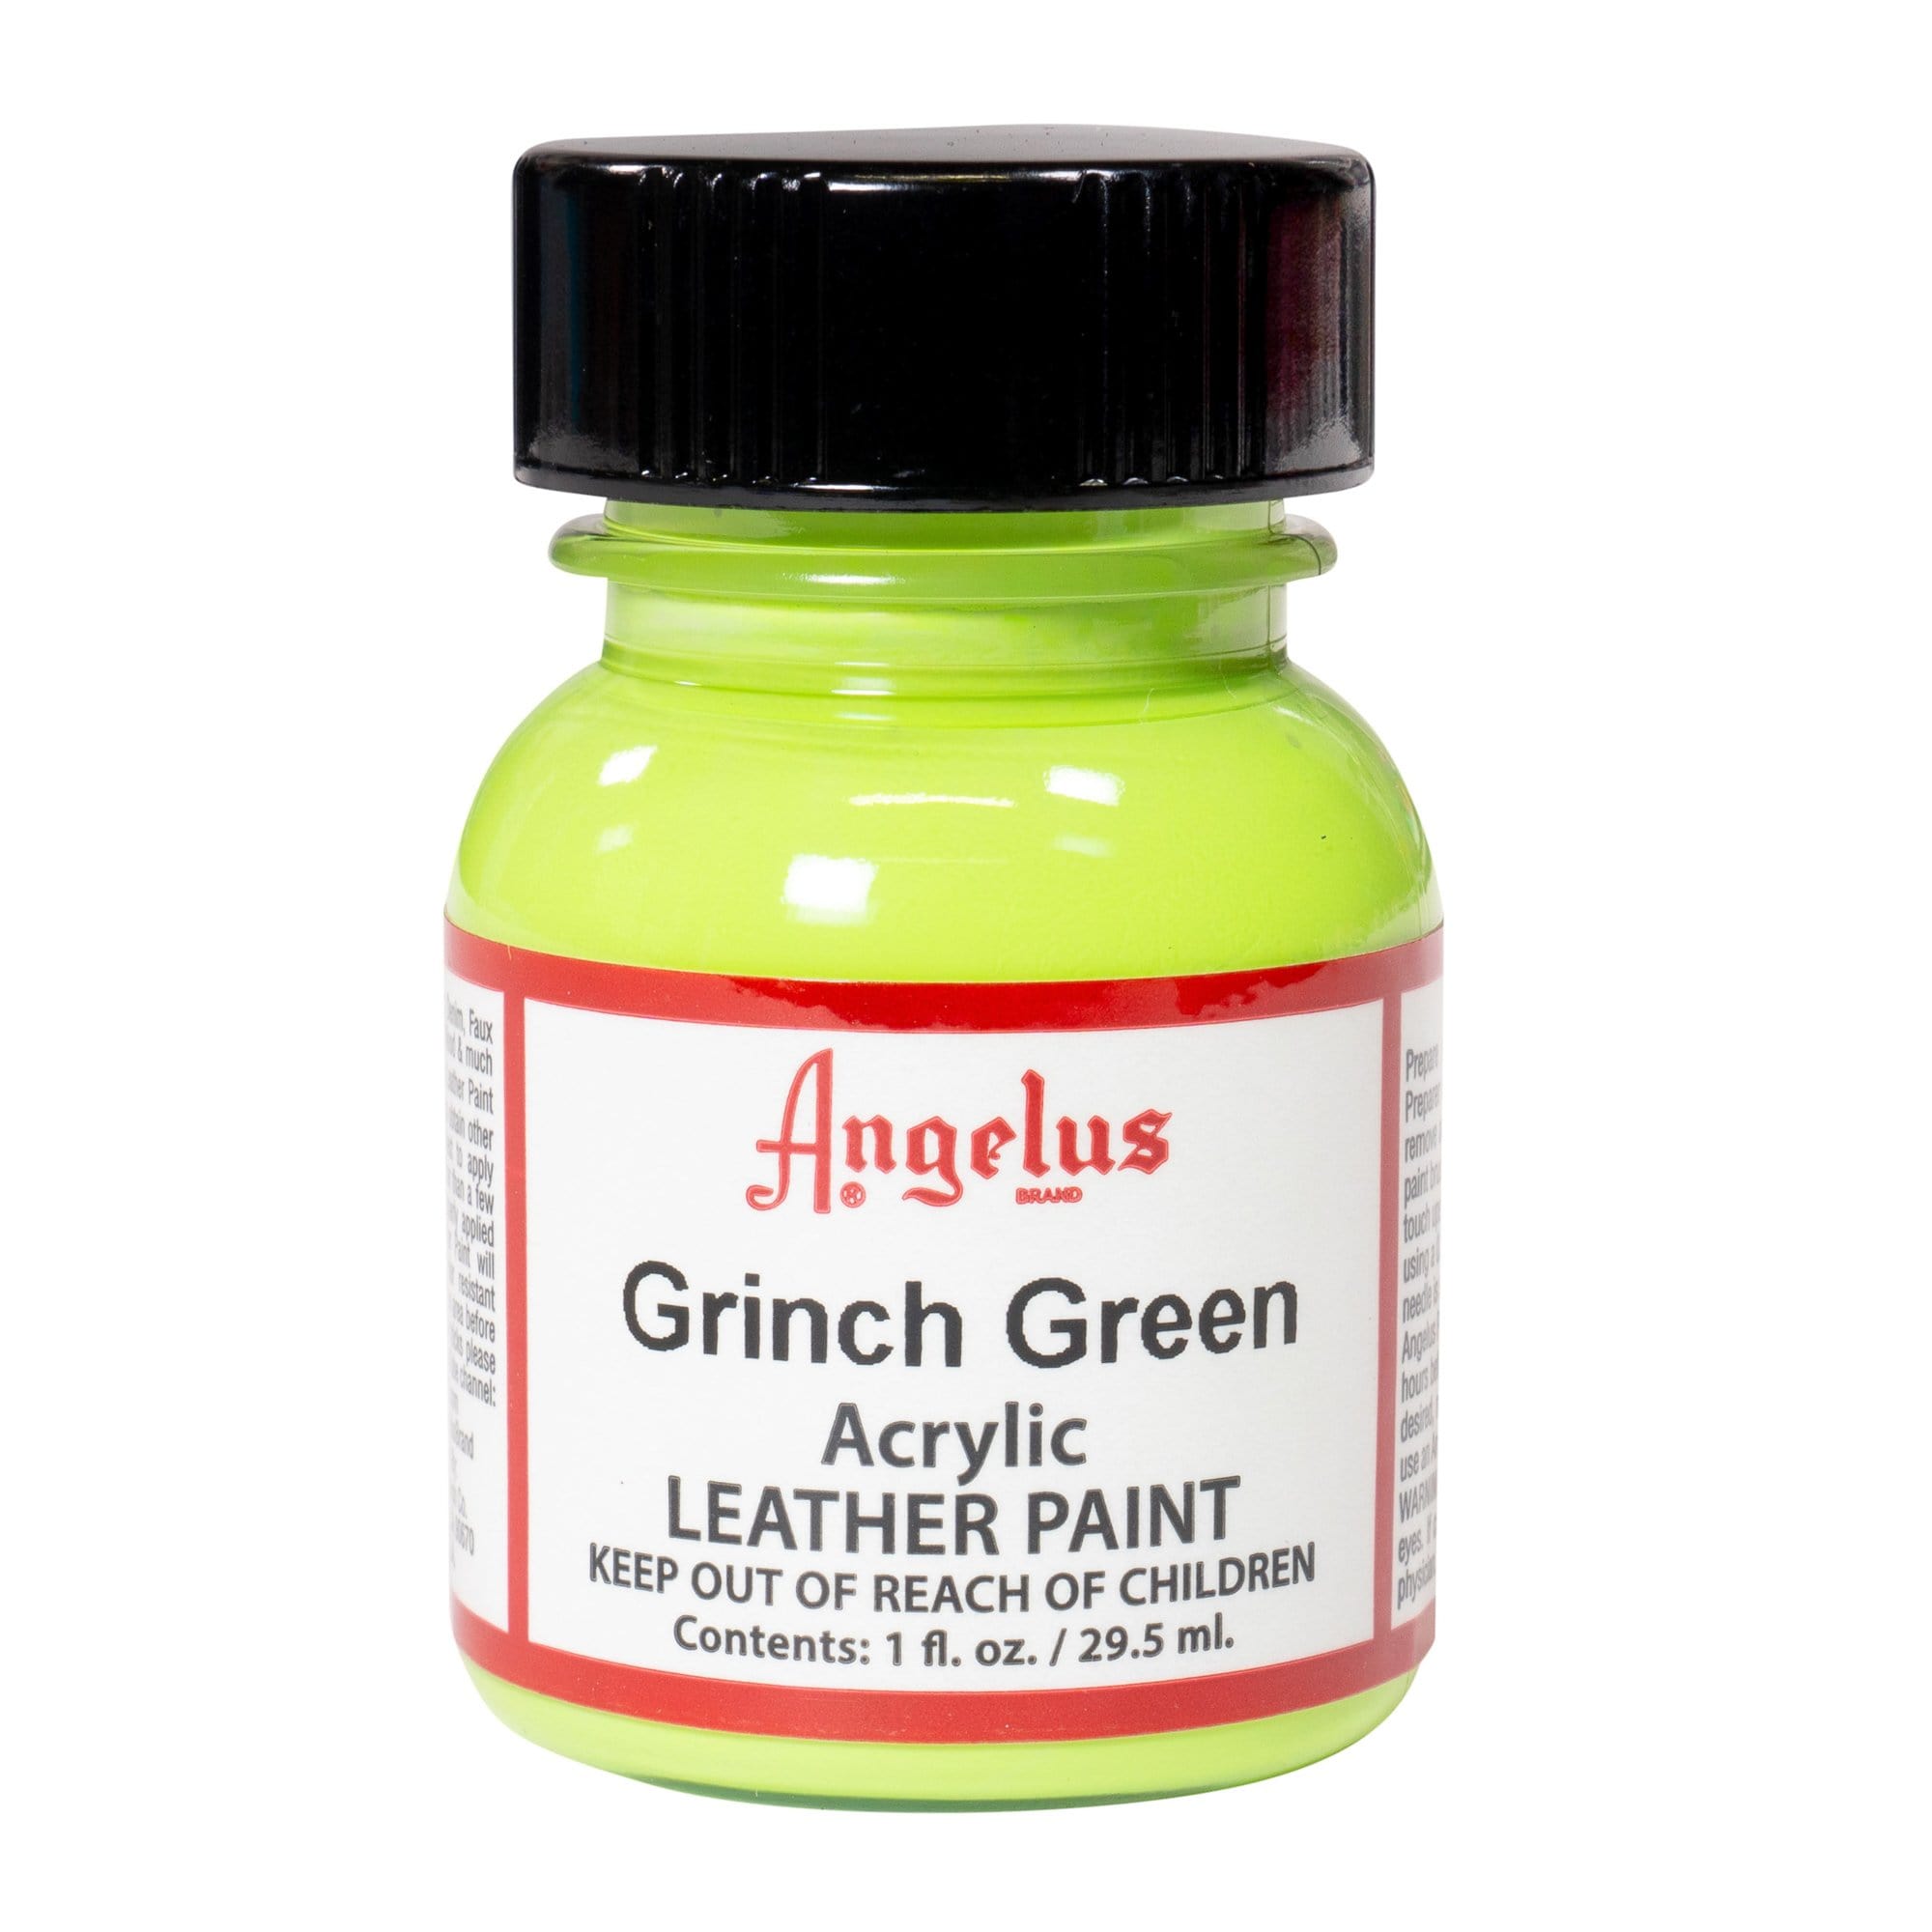 Angelus Acrylic Leather Paint - Joker Green, Collector Edition, 1 oz